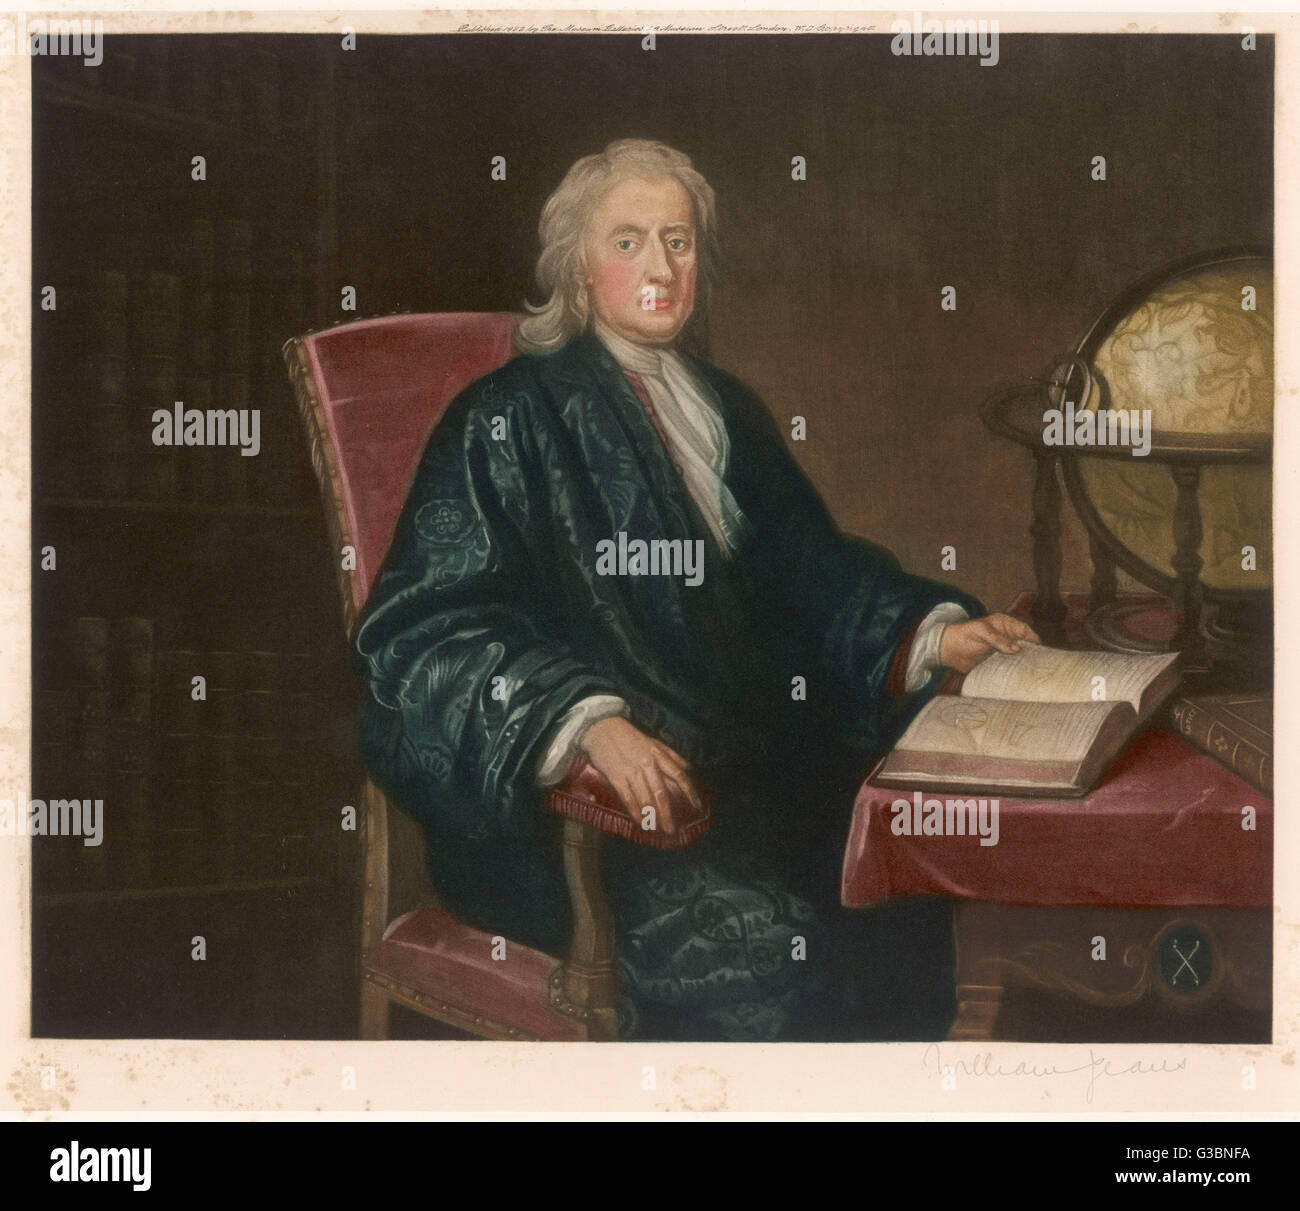 SIR ISAAC NEWTON - mathématicien et physicien, assis à sa table de travail, vers 1726. Date : 1642-1727 Banque D'Images